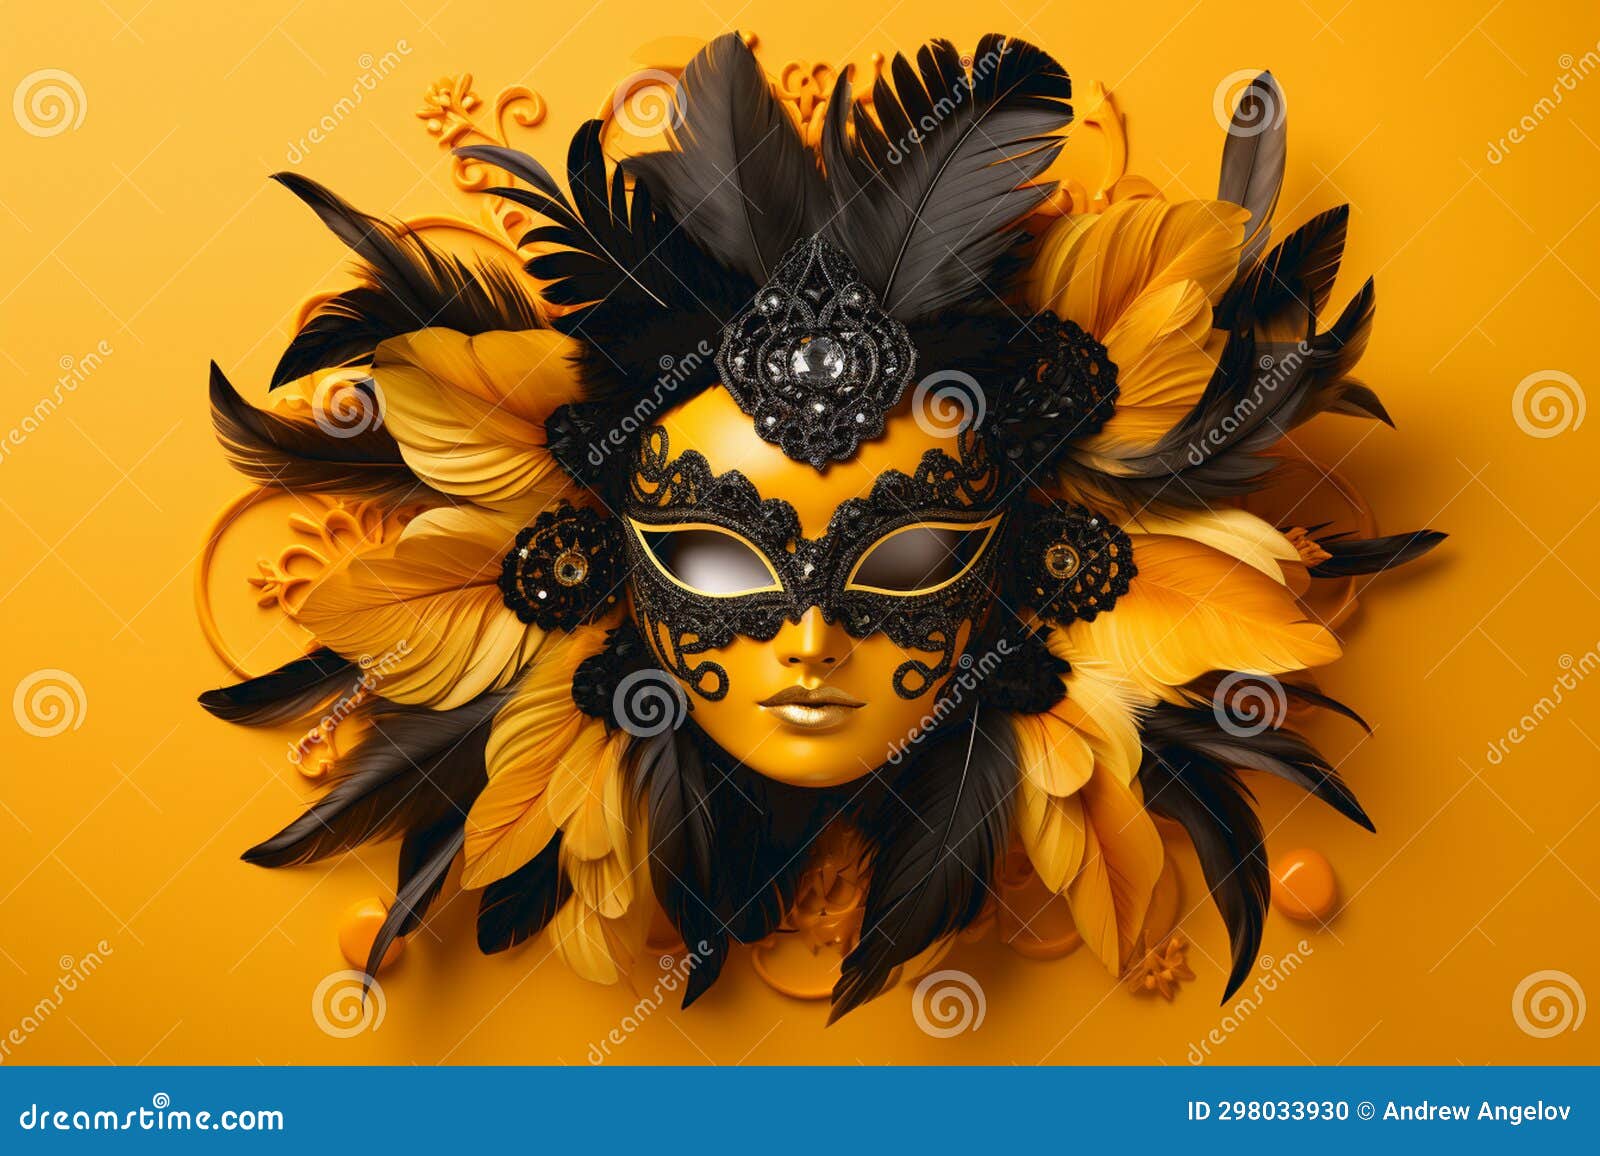 Venetian Mask, Original White Mask To Paint, Venice Mask Stock Image -  Image of decoration, carnival: 240207329